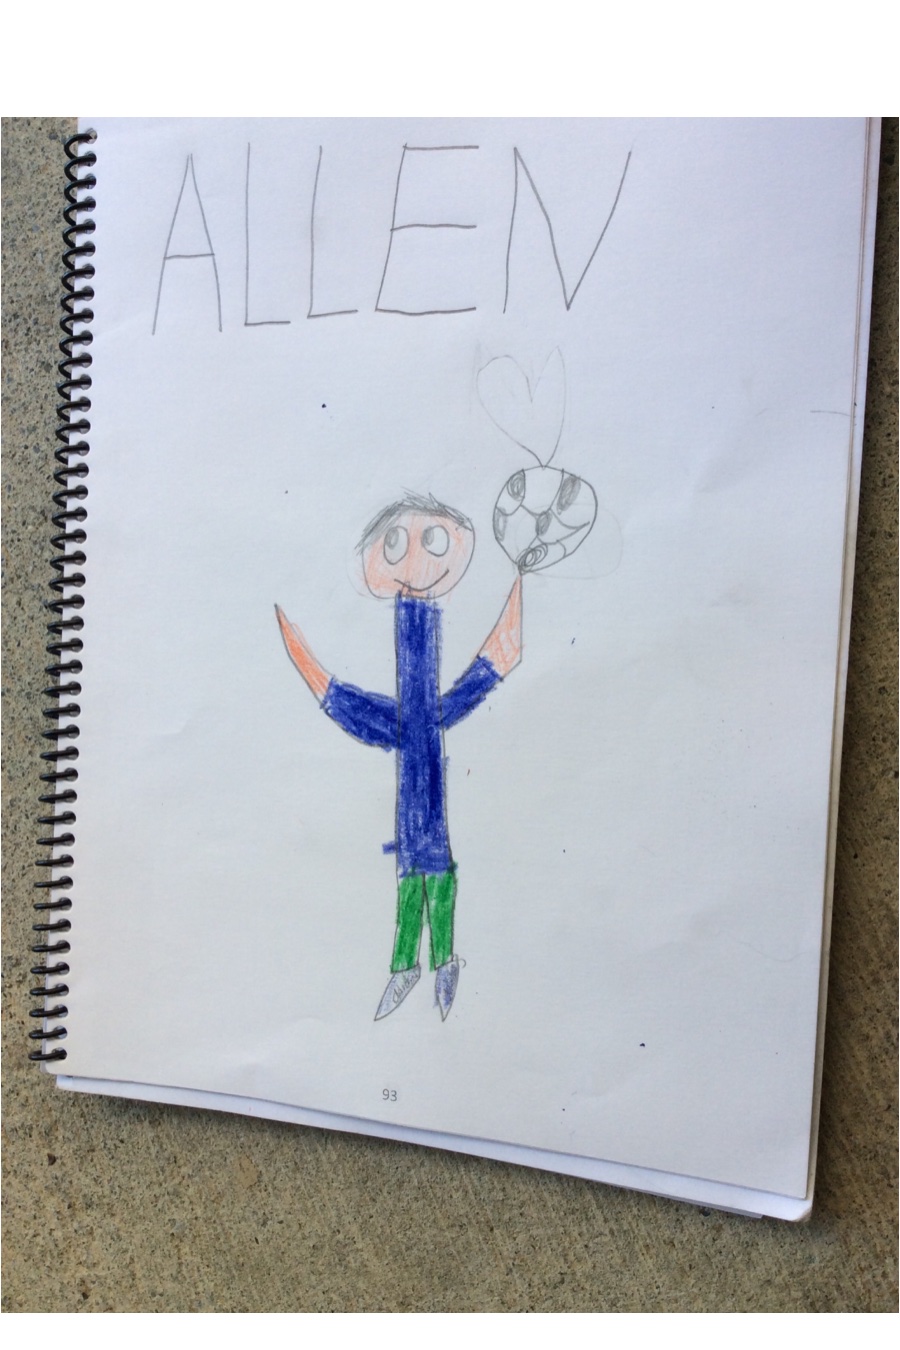 Allen the Goat by Allen K